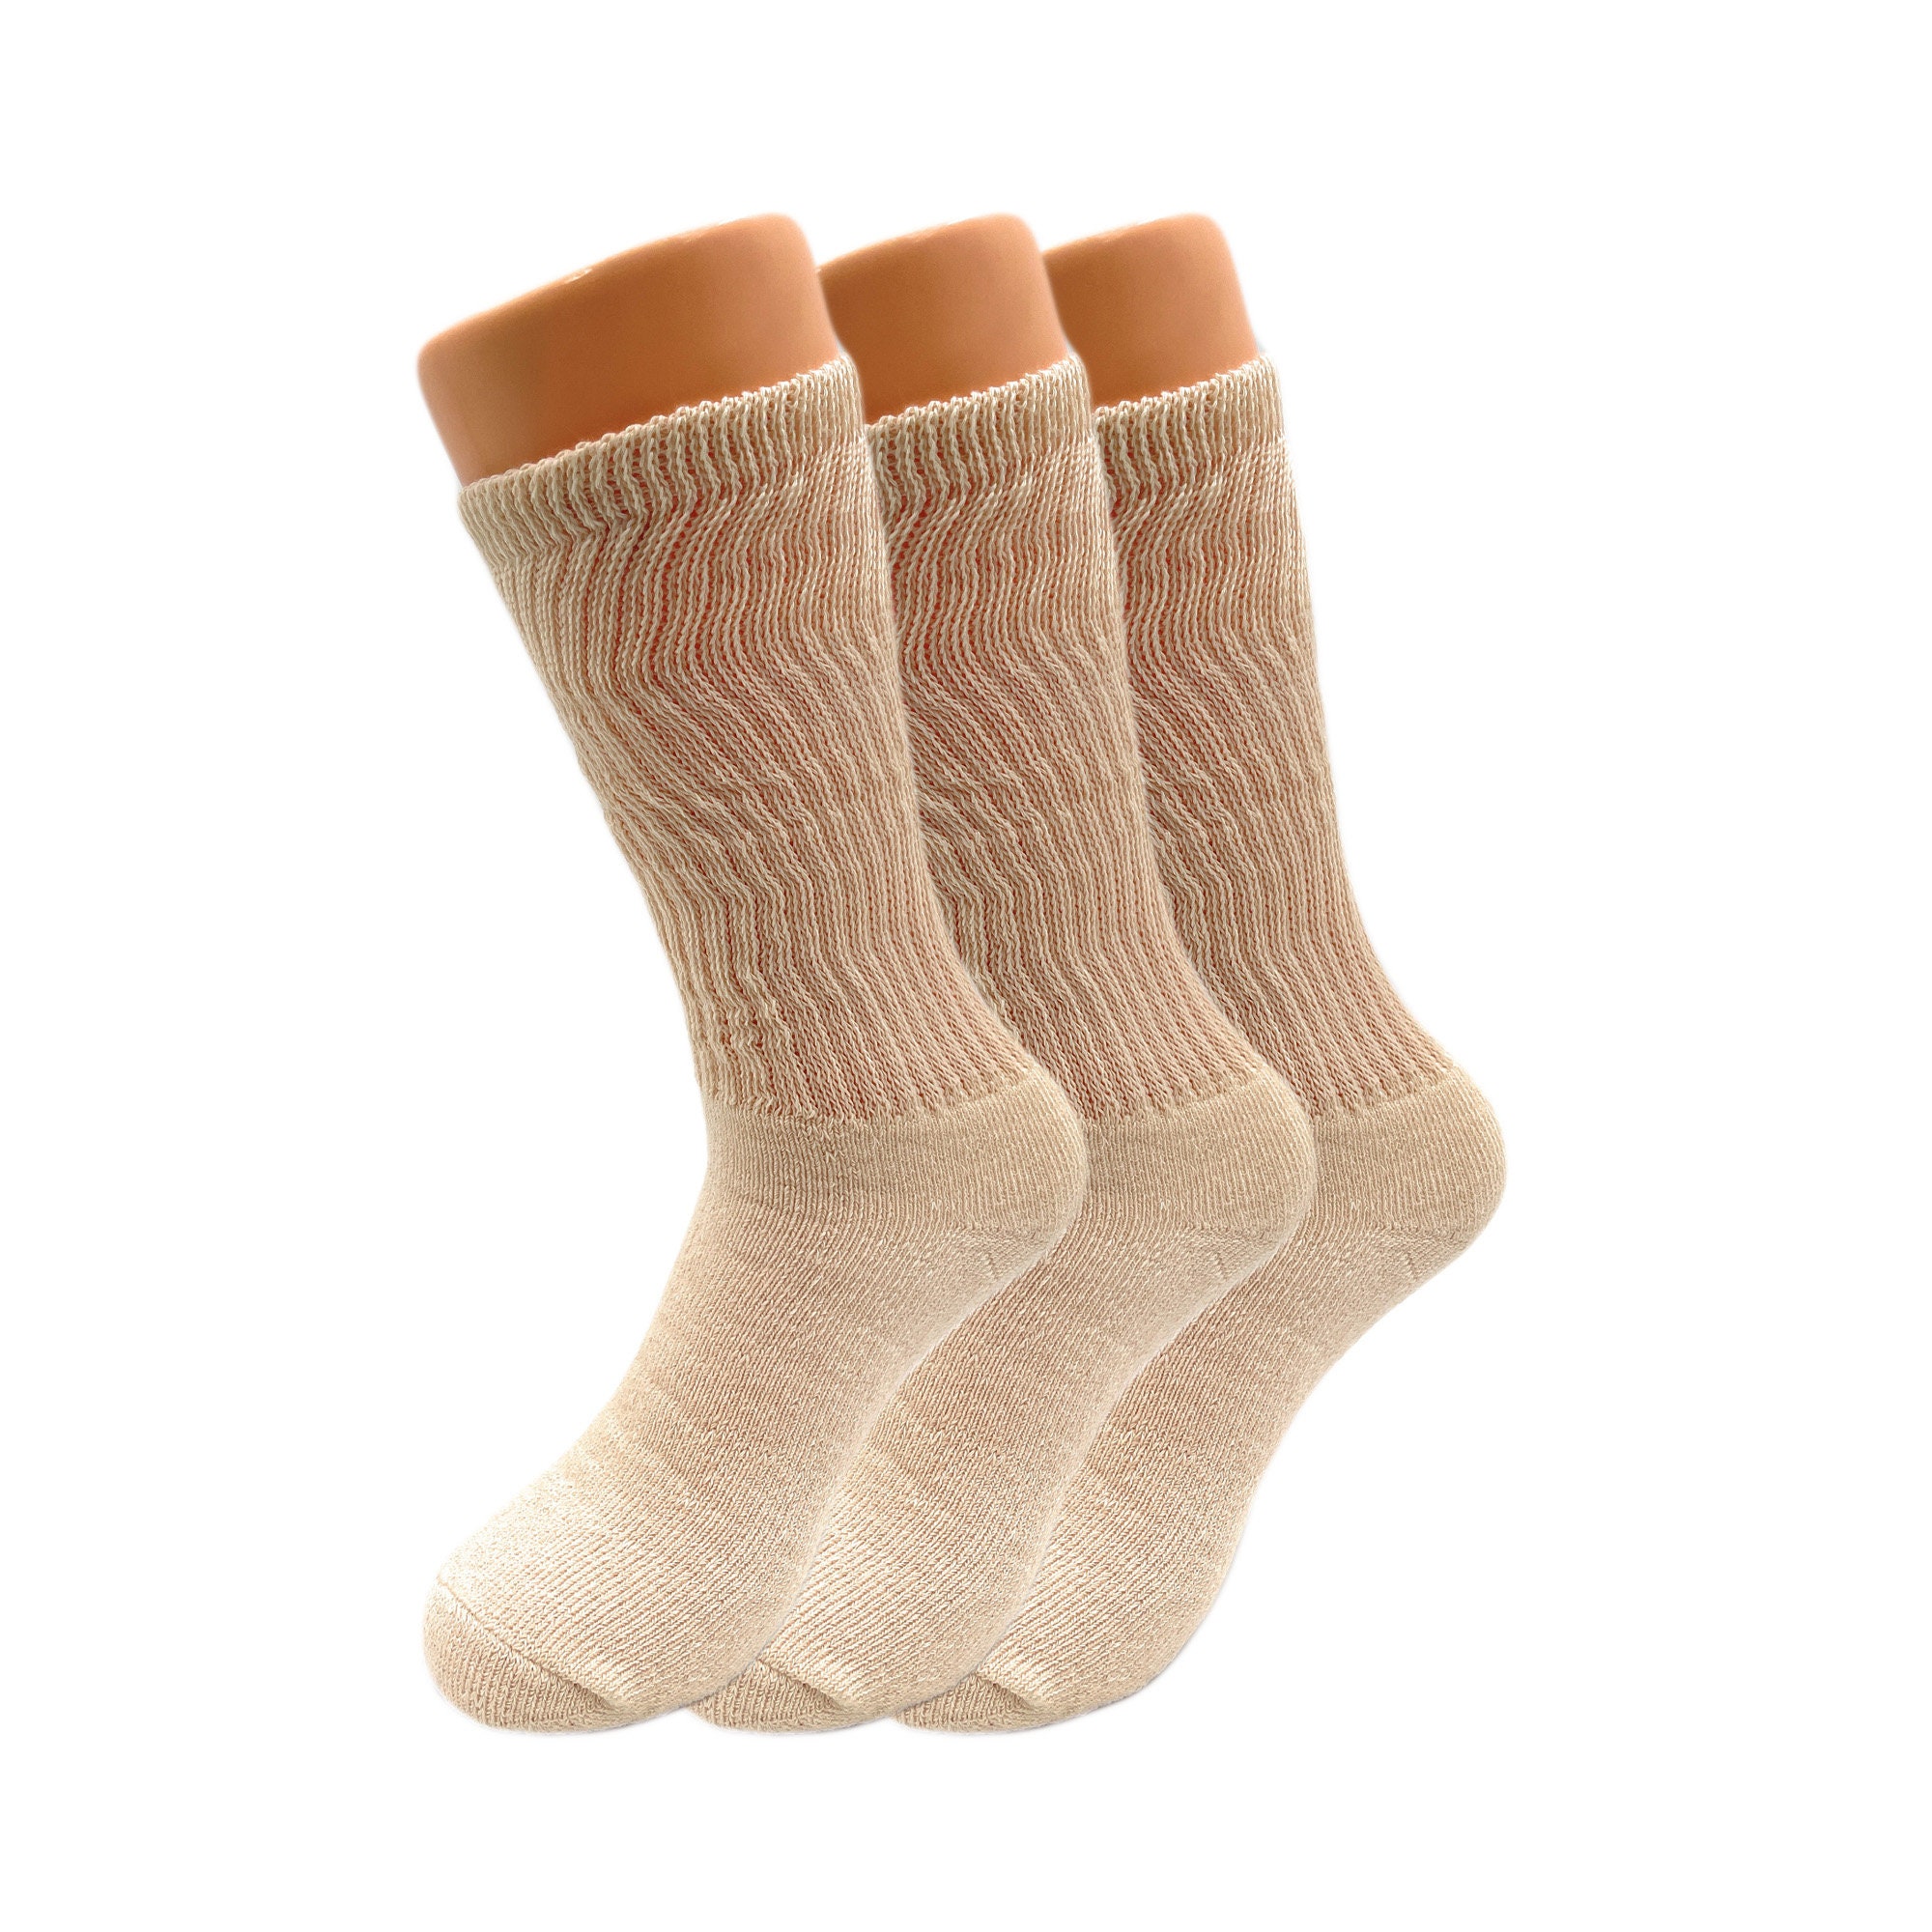 Mis aantal Regenjas Mid Calf Crew Socks for Women Cotton Cushioned Socks 3 Pairs - Etsy